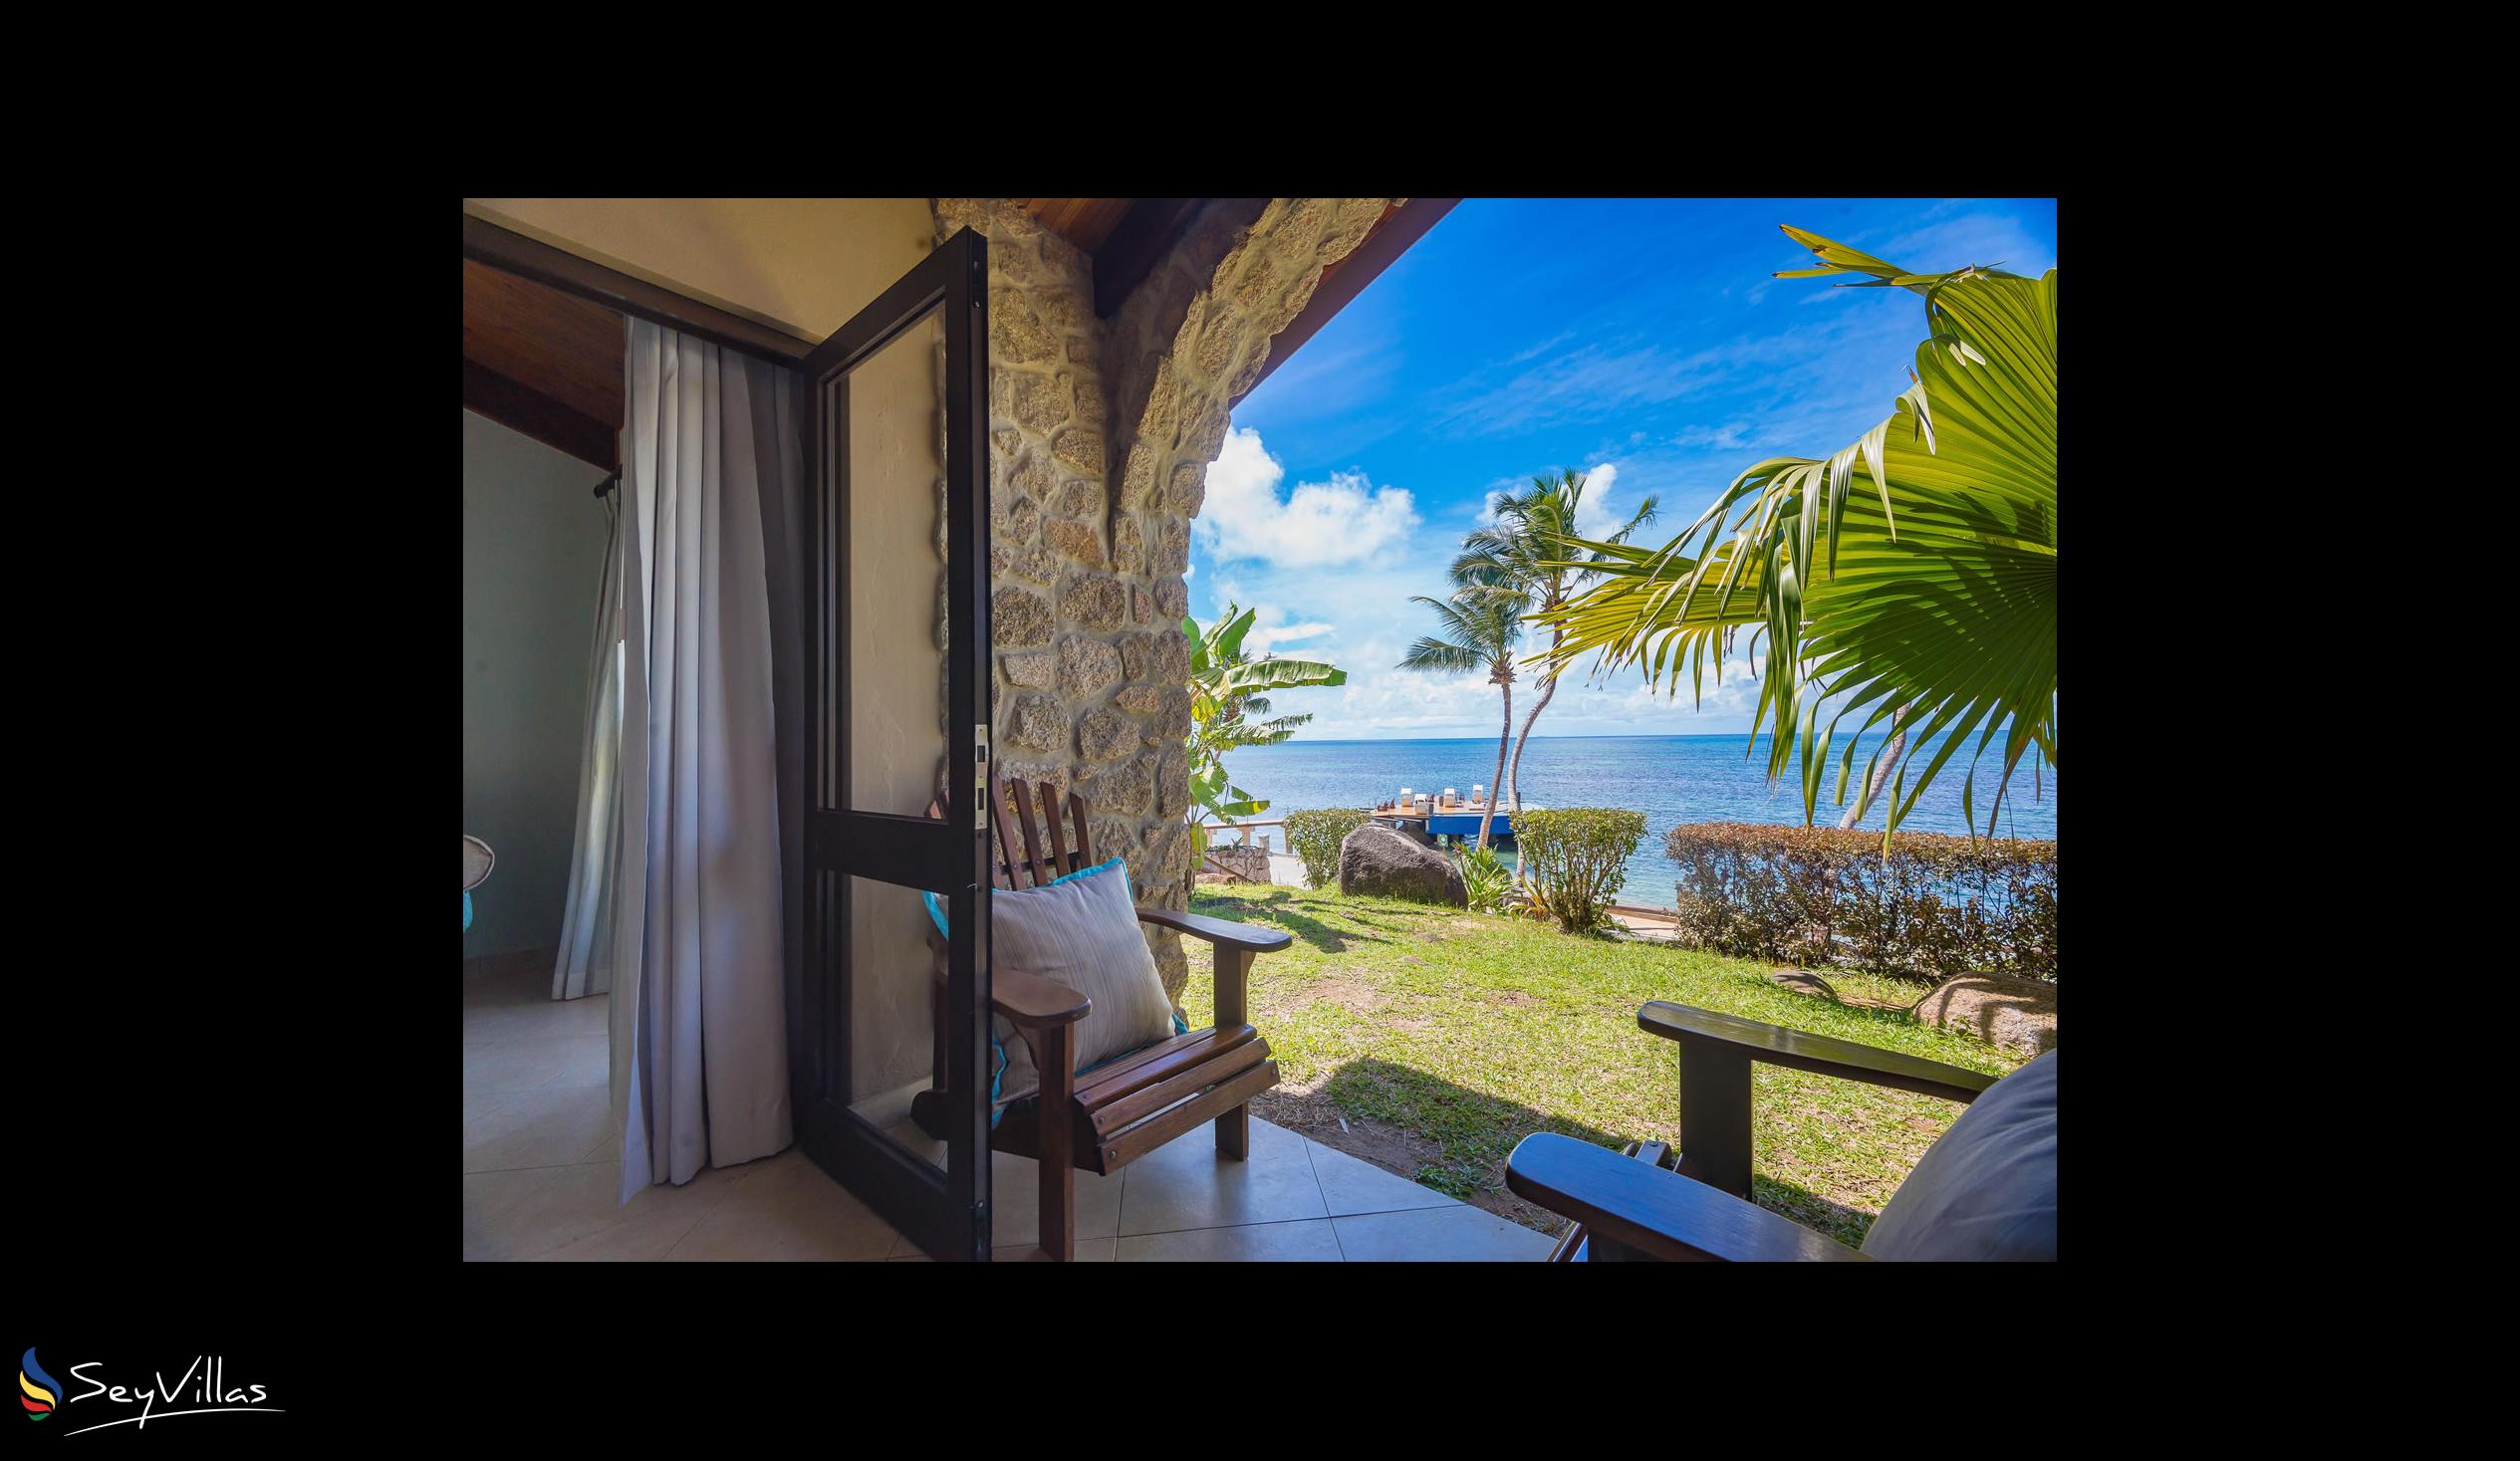 Photo 54: Coco de Mer & Black Parrot Suites - Standard - Praslin (Seychelles)